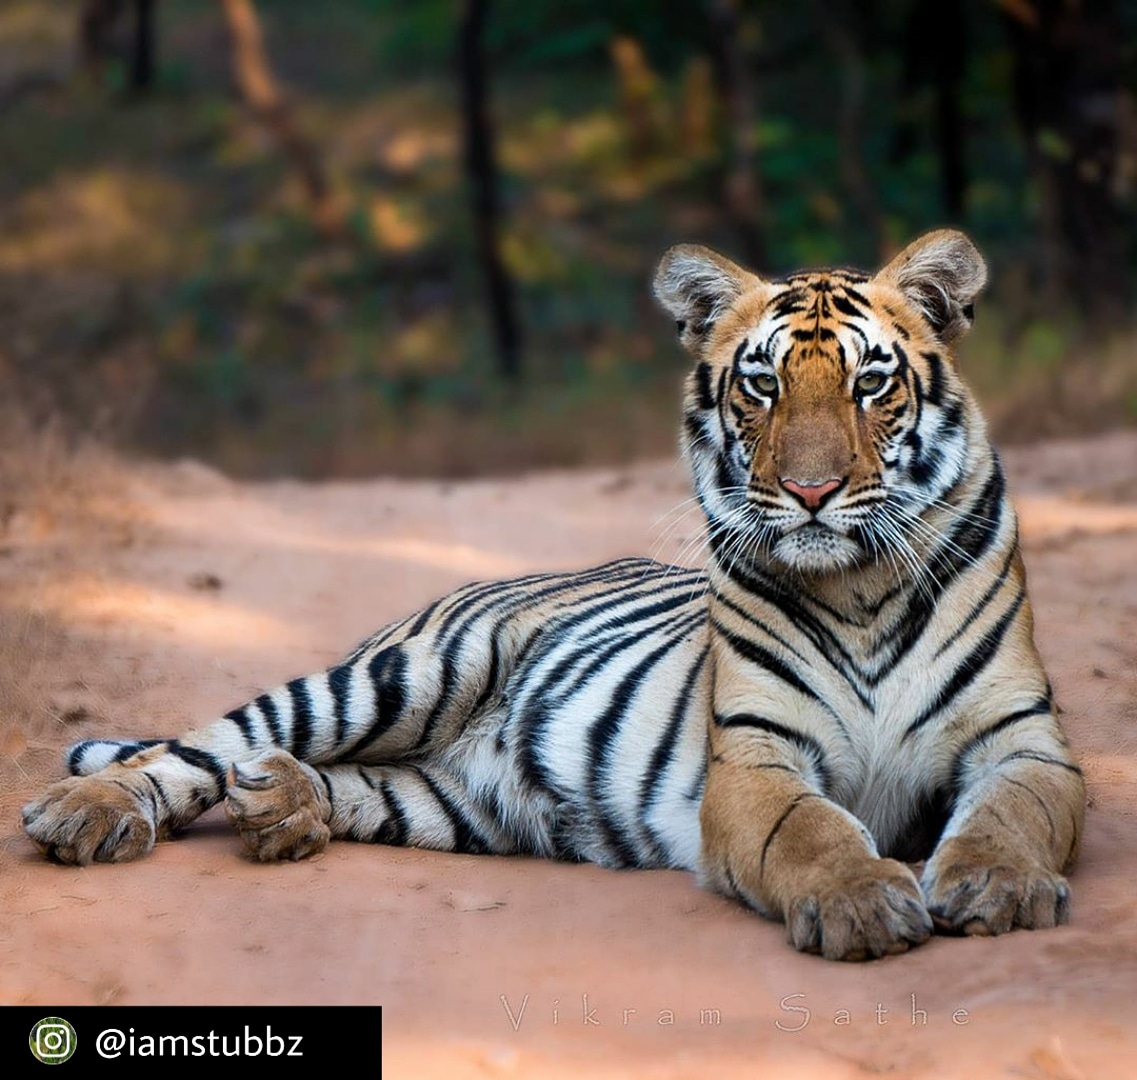 Tiger Monday! 🐯

Click by: @iamstubbz

#PCA #PhotographersClubNagar #Tiger #IndiaTiger #Photography #TigerPhotography #WildLifeTiger #WildLifePhotography #WildTigers #TigerCUB #TigerTattoo #TigerAnimal #TigerPhotos #TigerPhotographers #TigerPhotographyIdeas